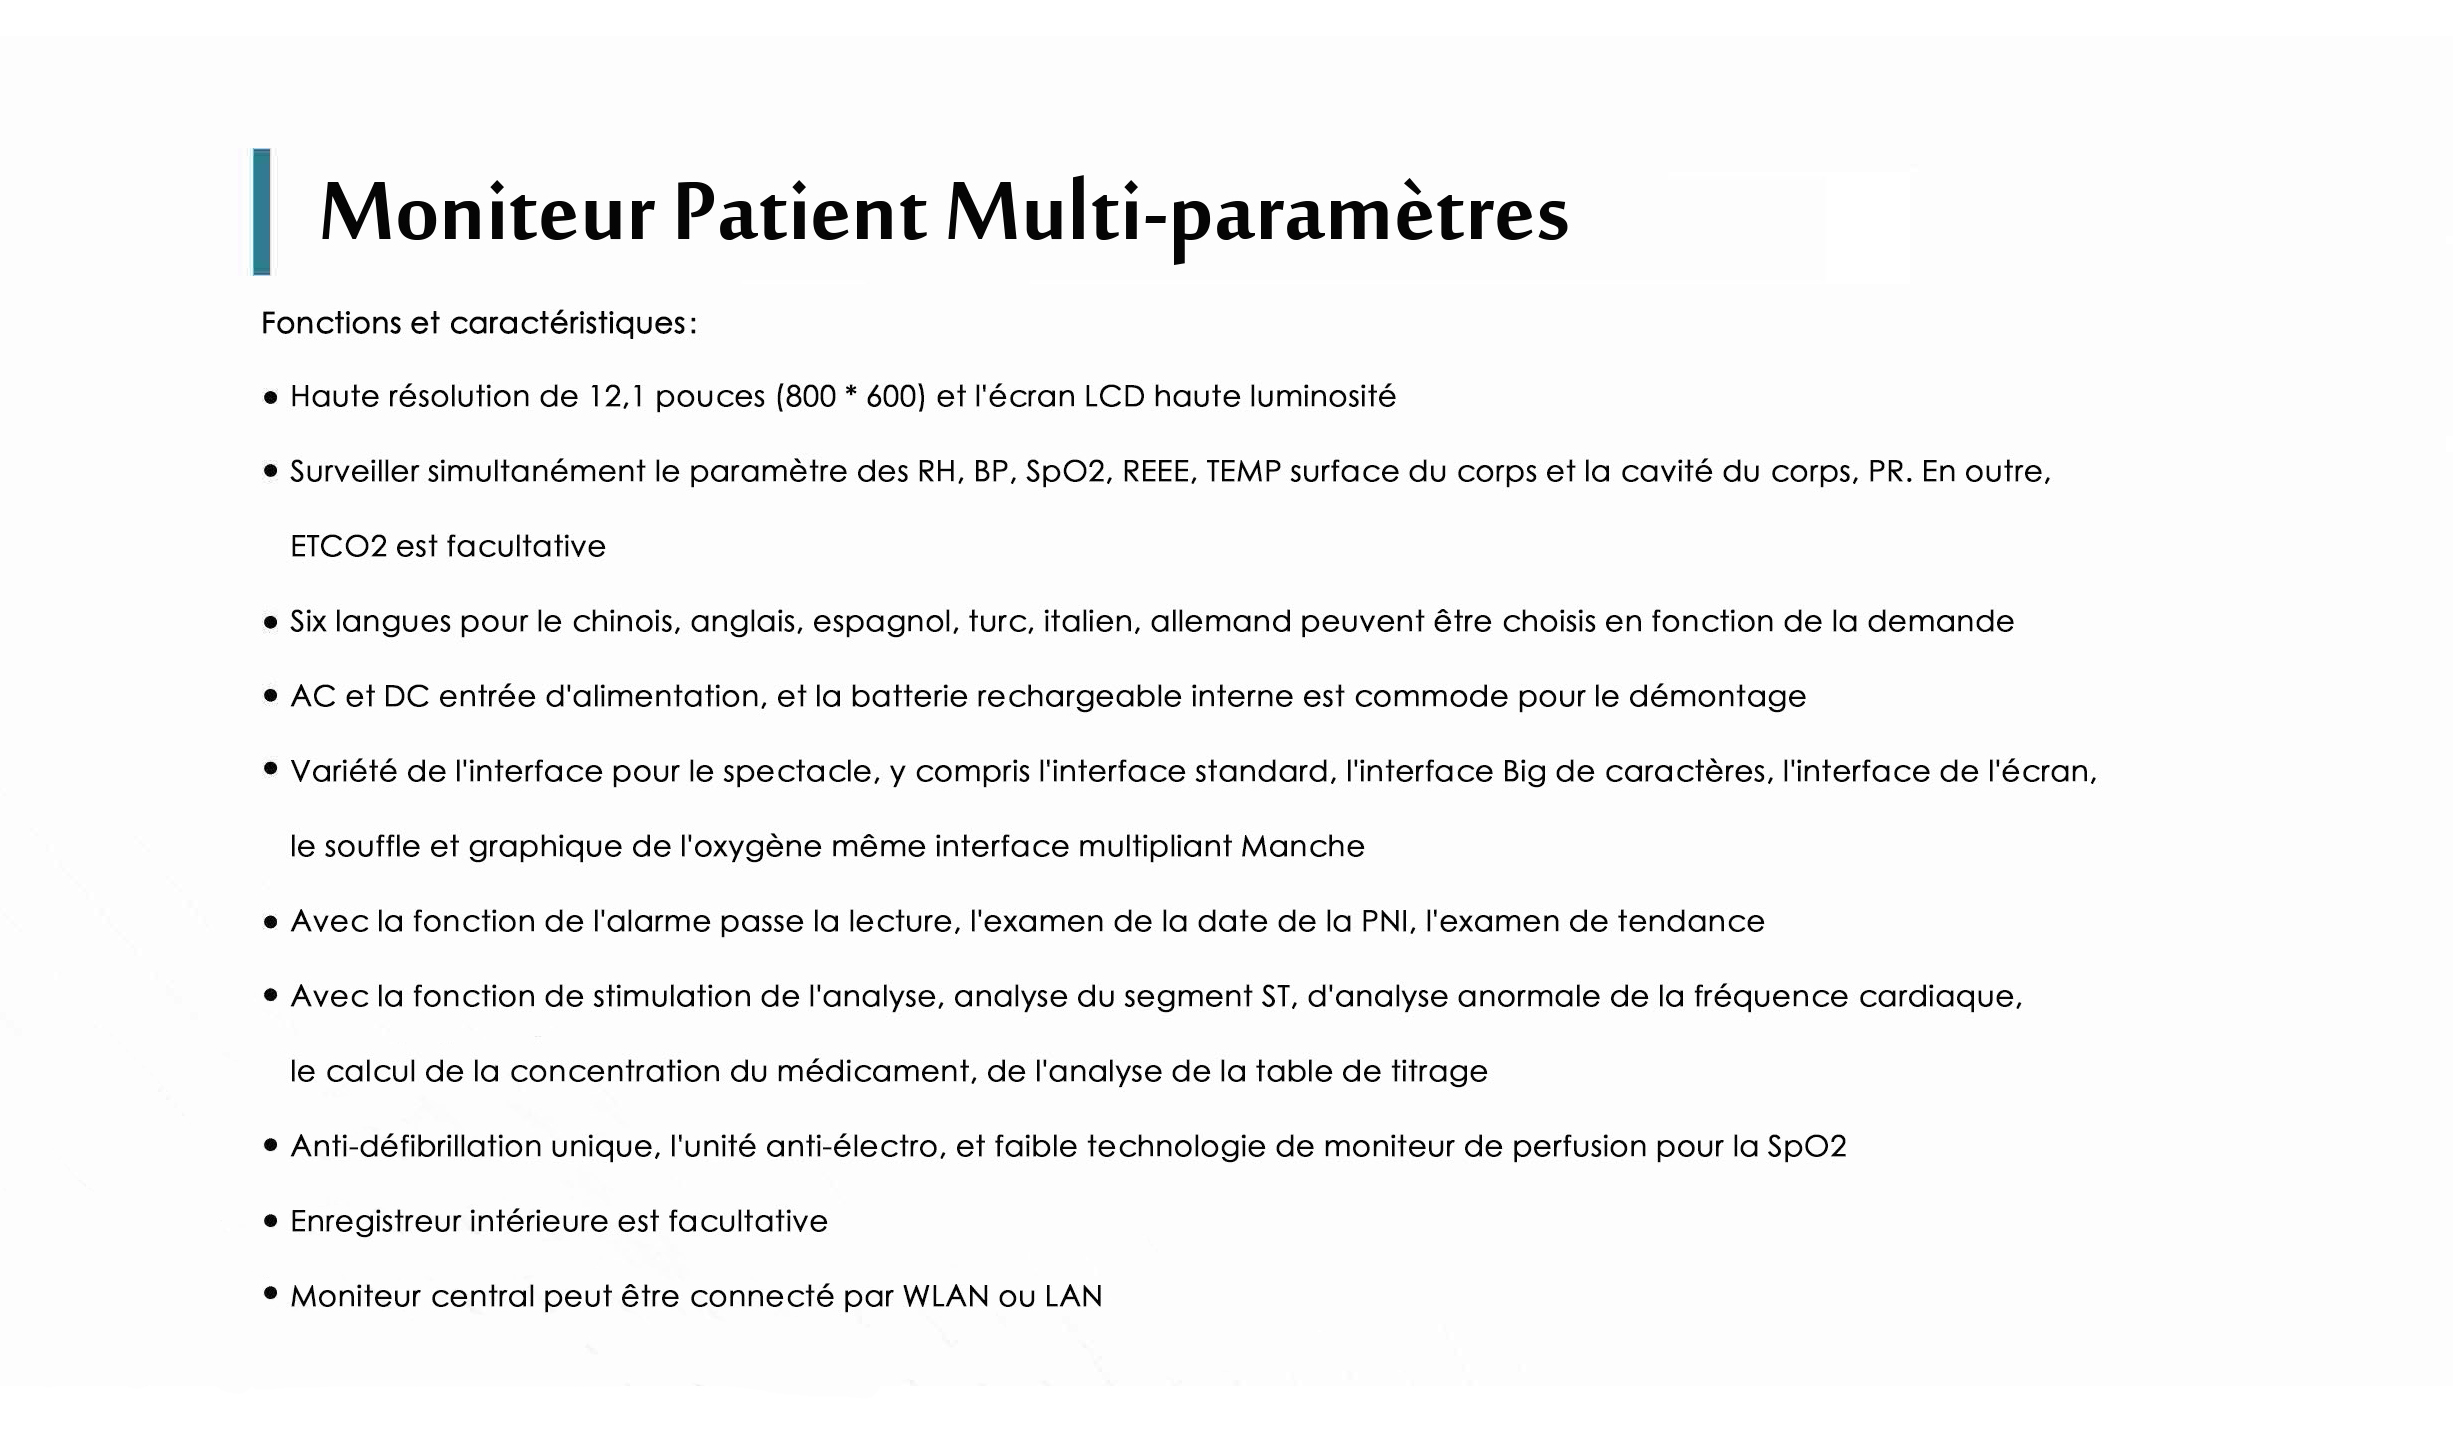 Raecho Multi-parameter Patient Monitor601C-1.jpg